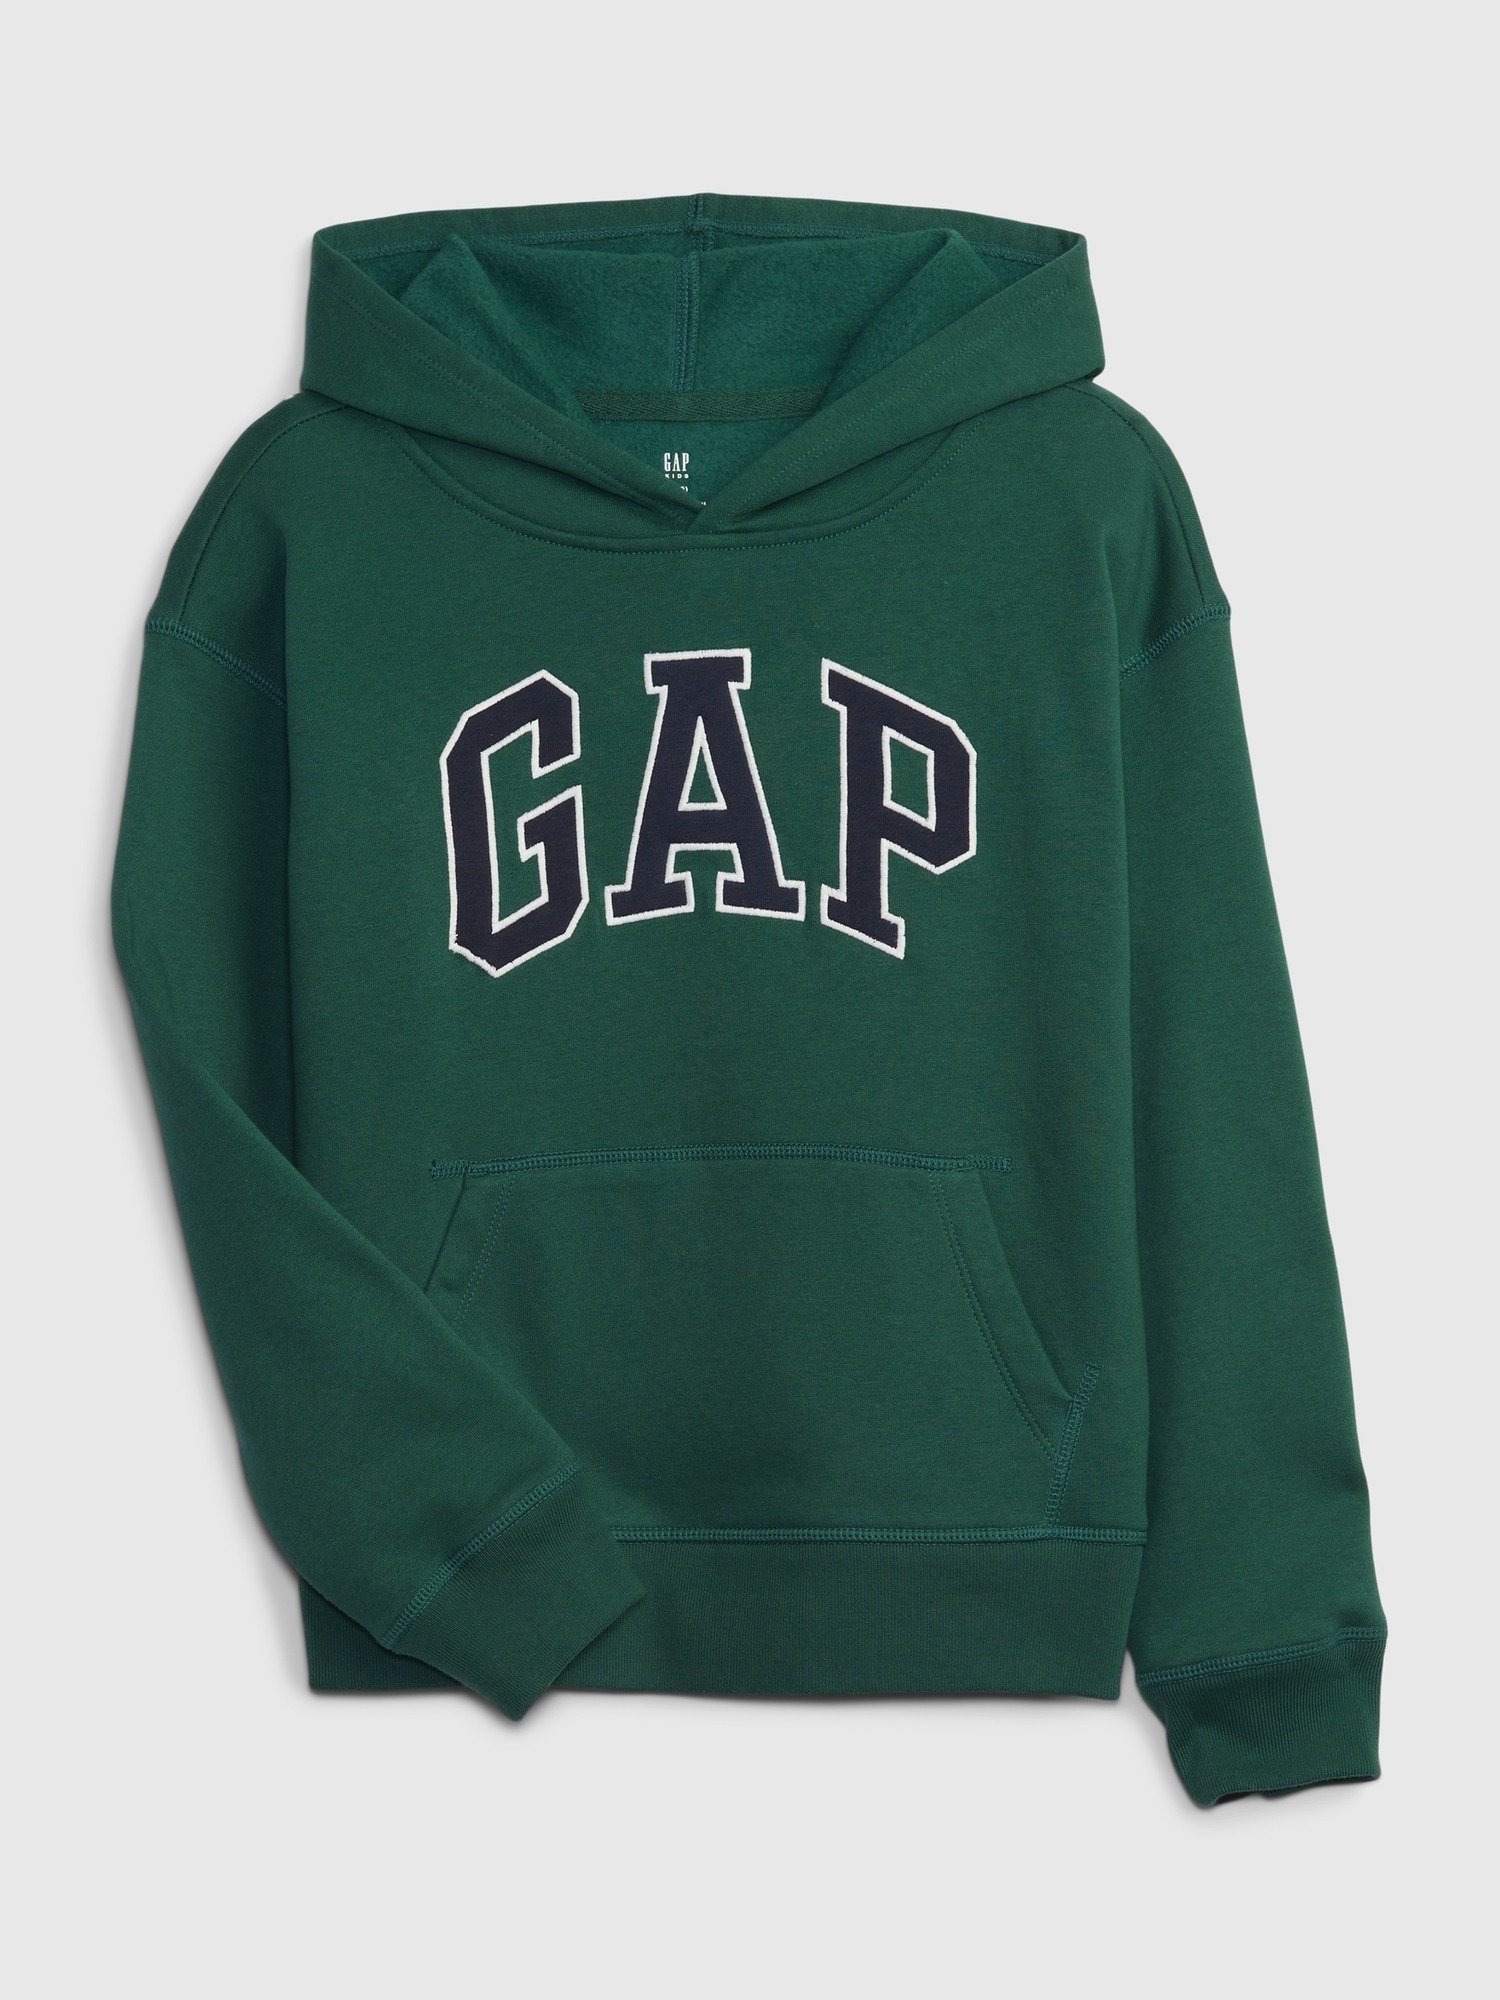 Gap Arch Logo Sweatshirt product image